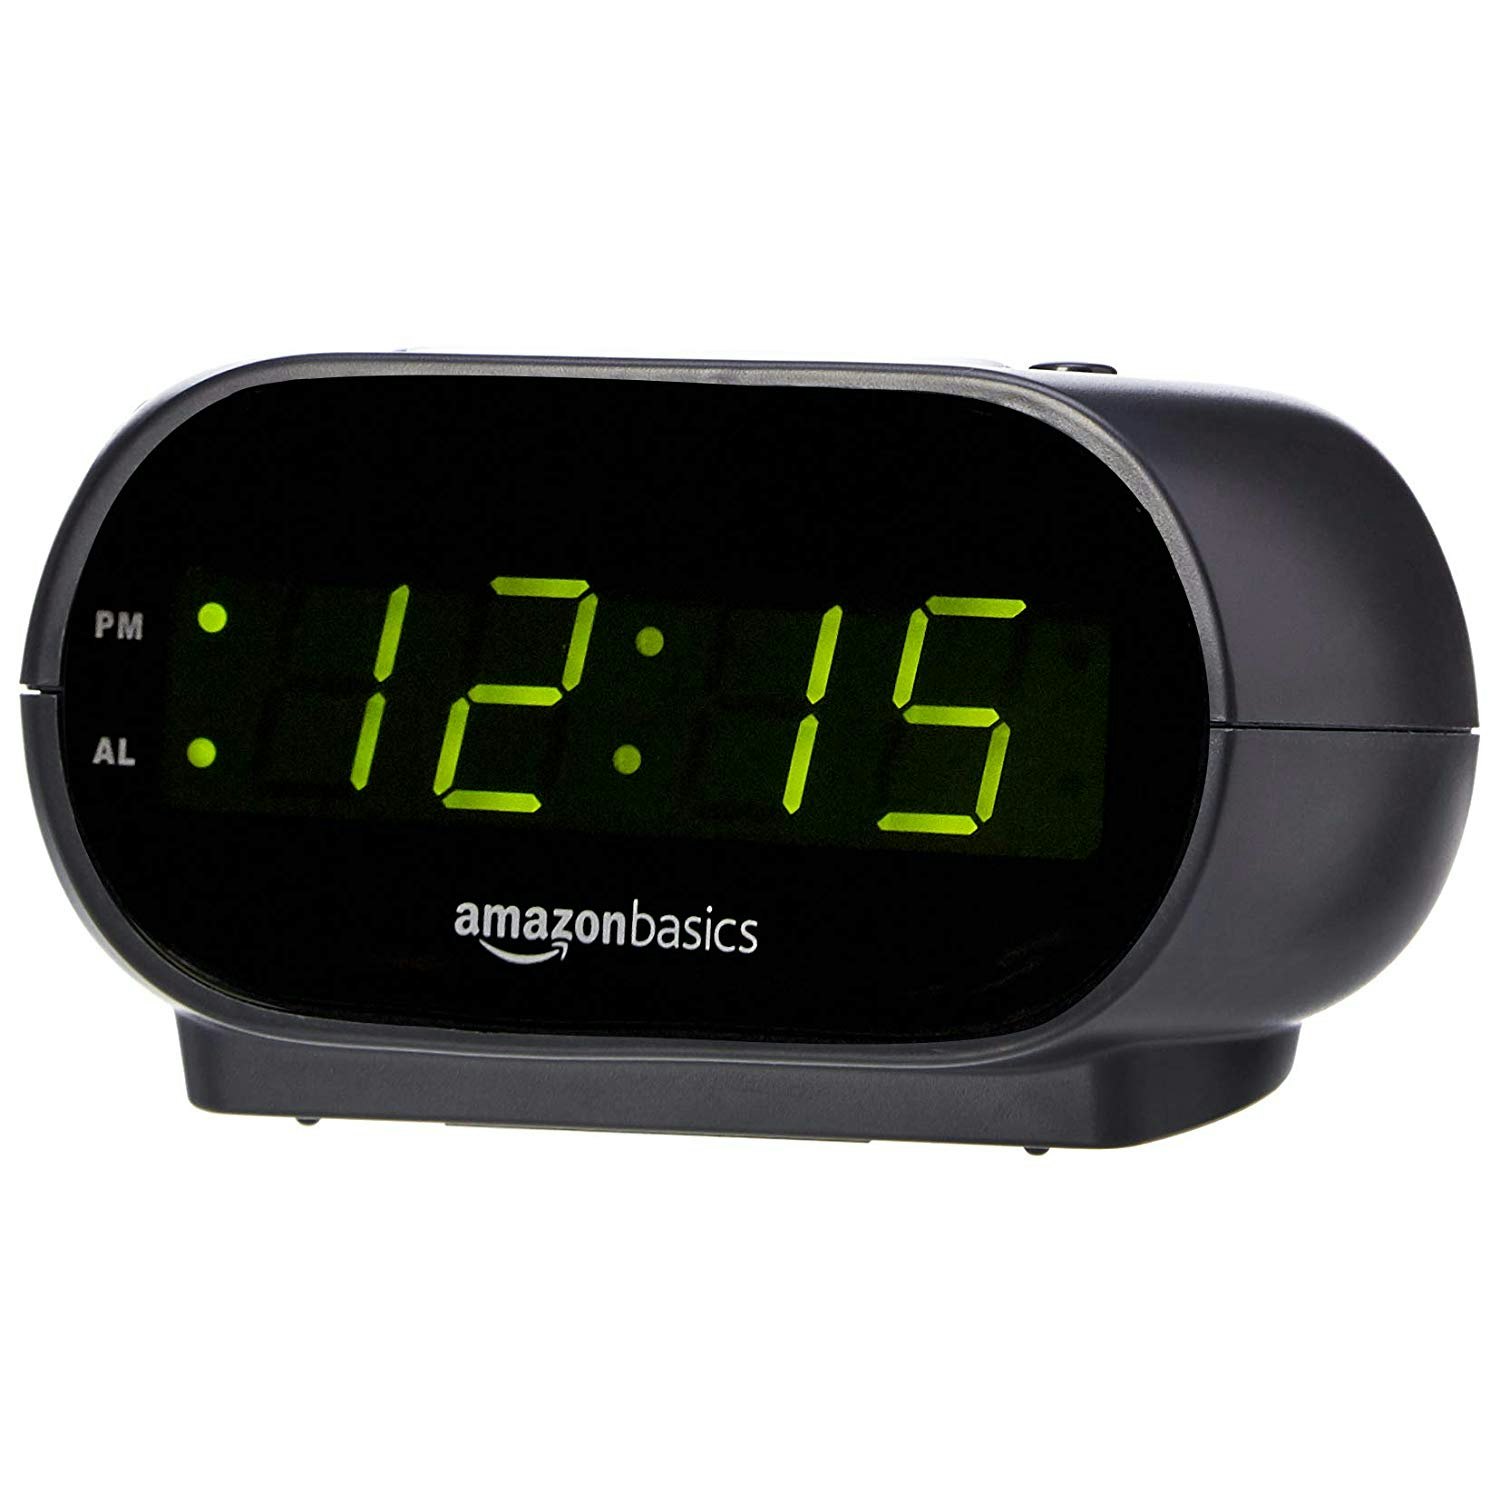 best night stand alarm radio clock